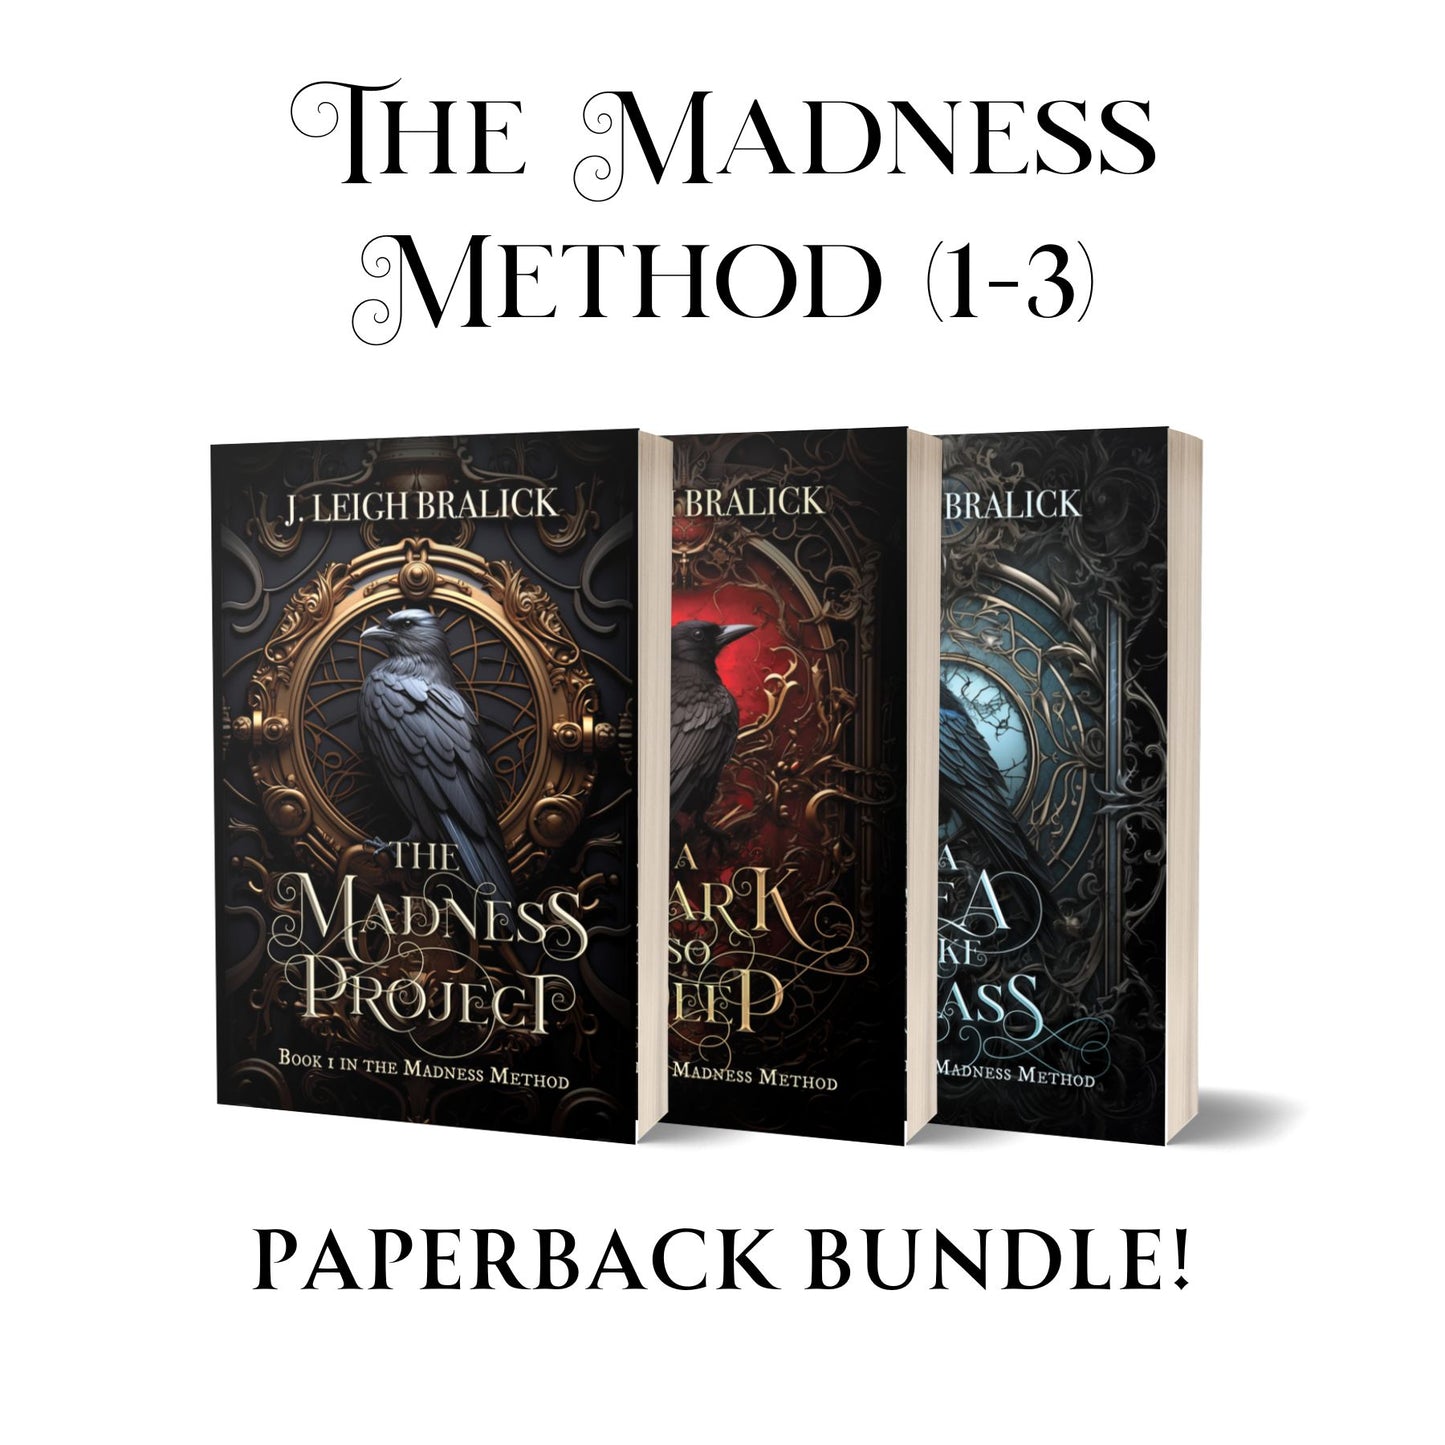 The Madness Method 1-3 Paperback Bundle